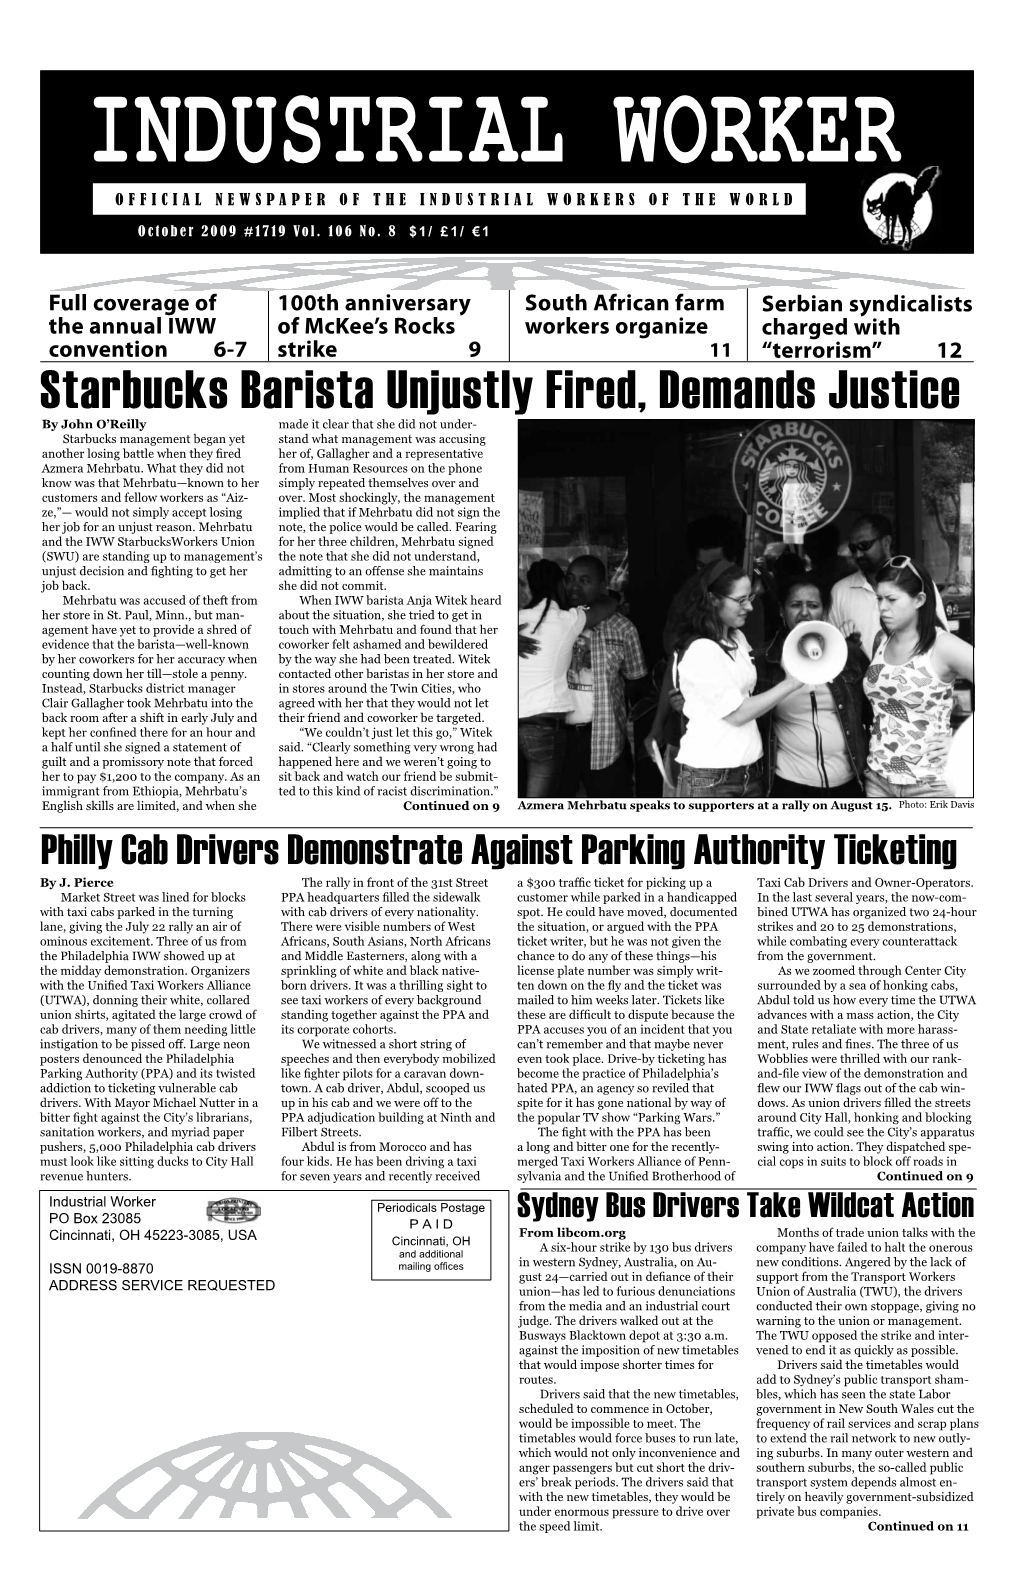 Starbucks Barista Unjustly Fired, Demands Justice